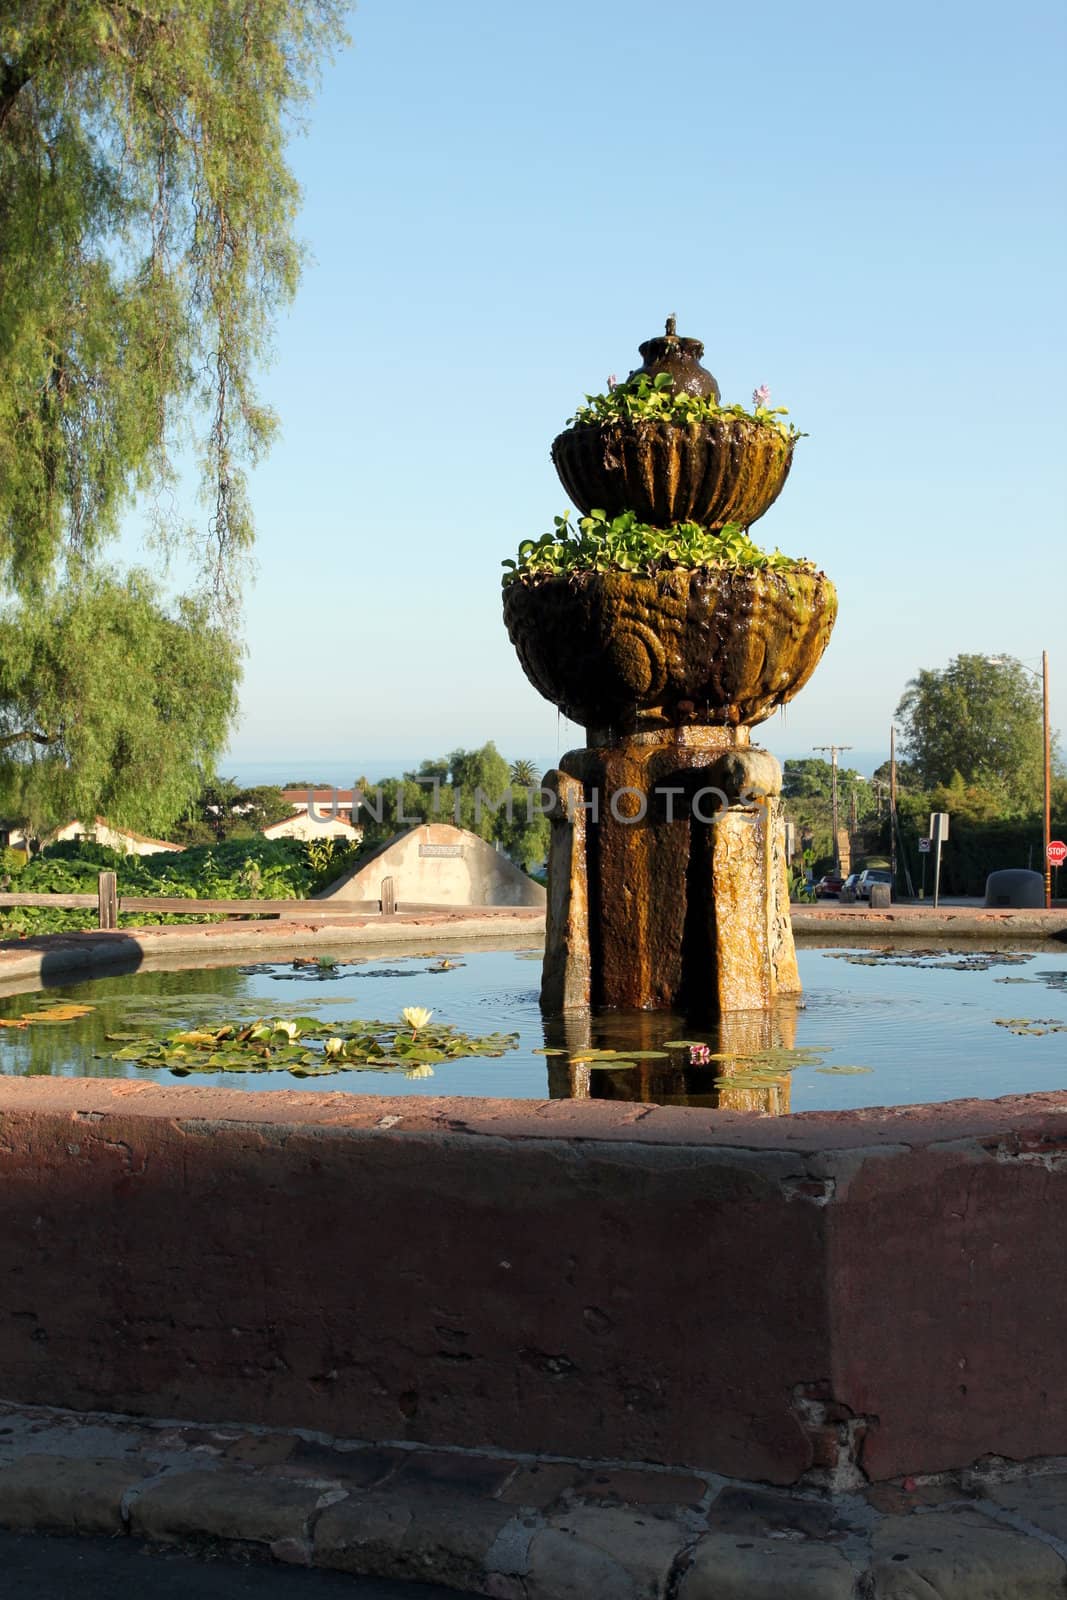 Santa Barbara Mission Fountain by hlehnerer